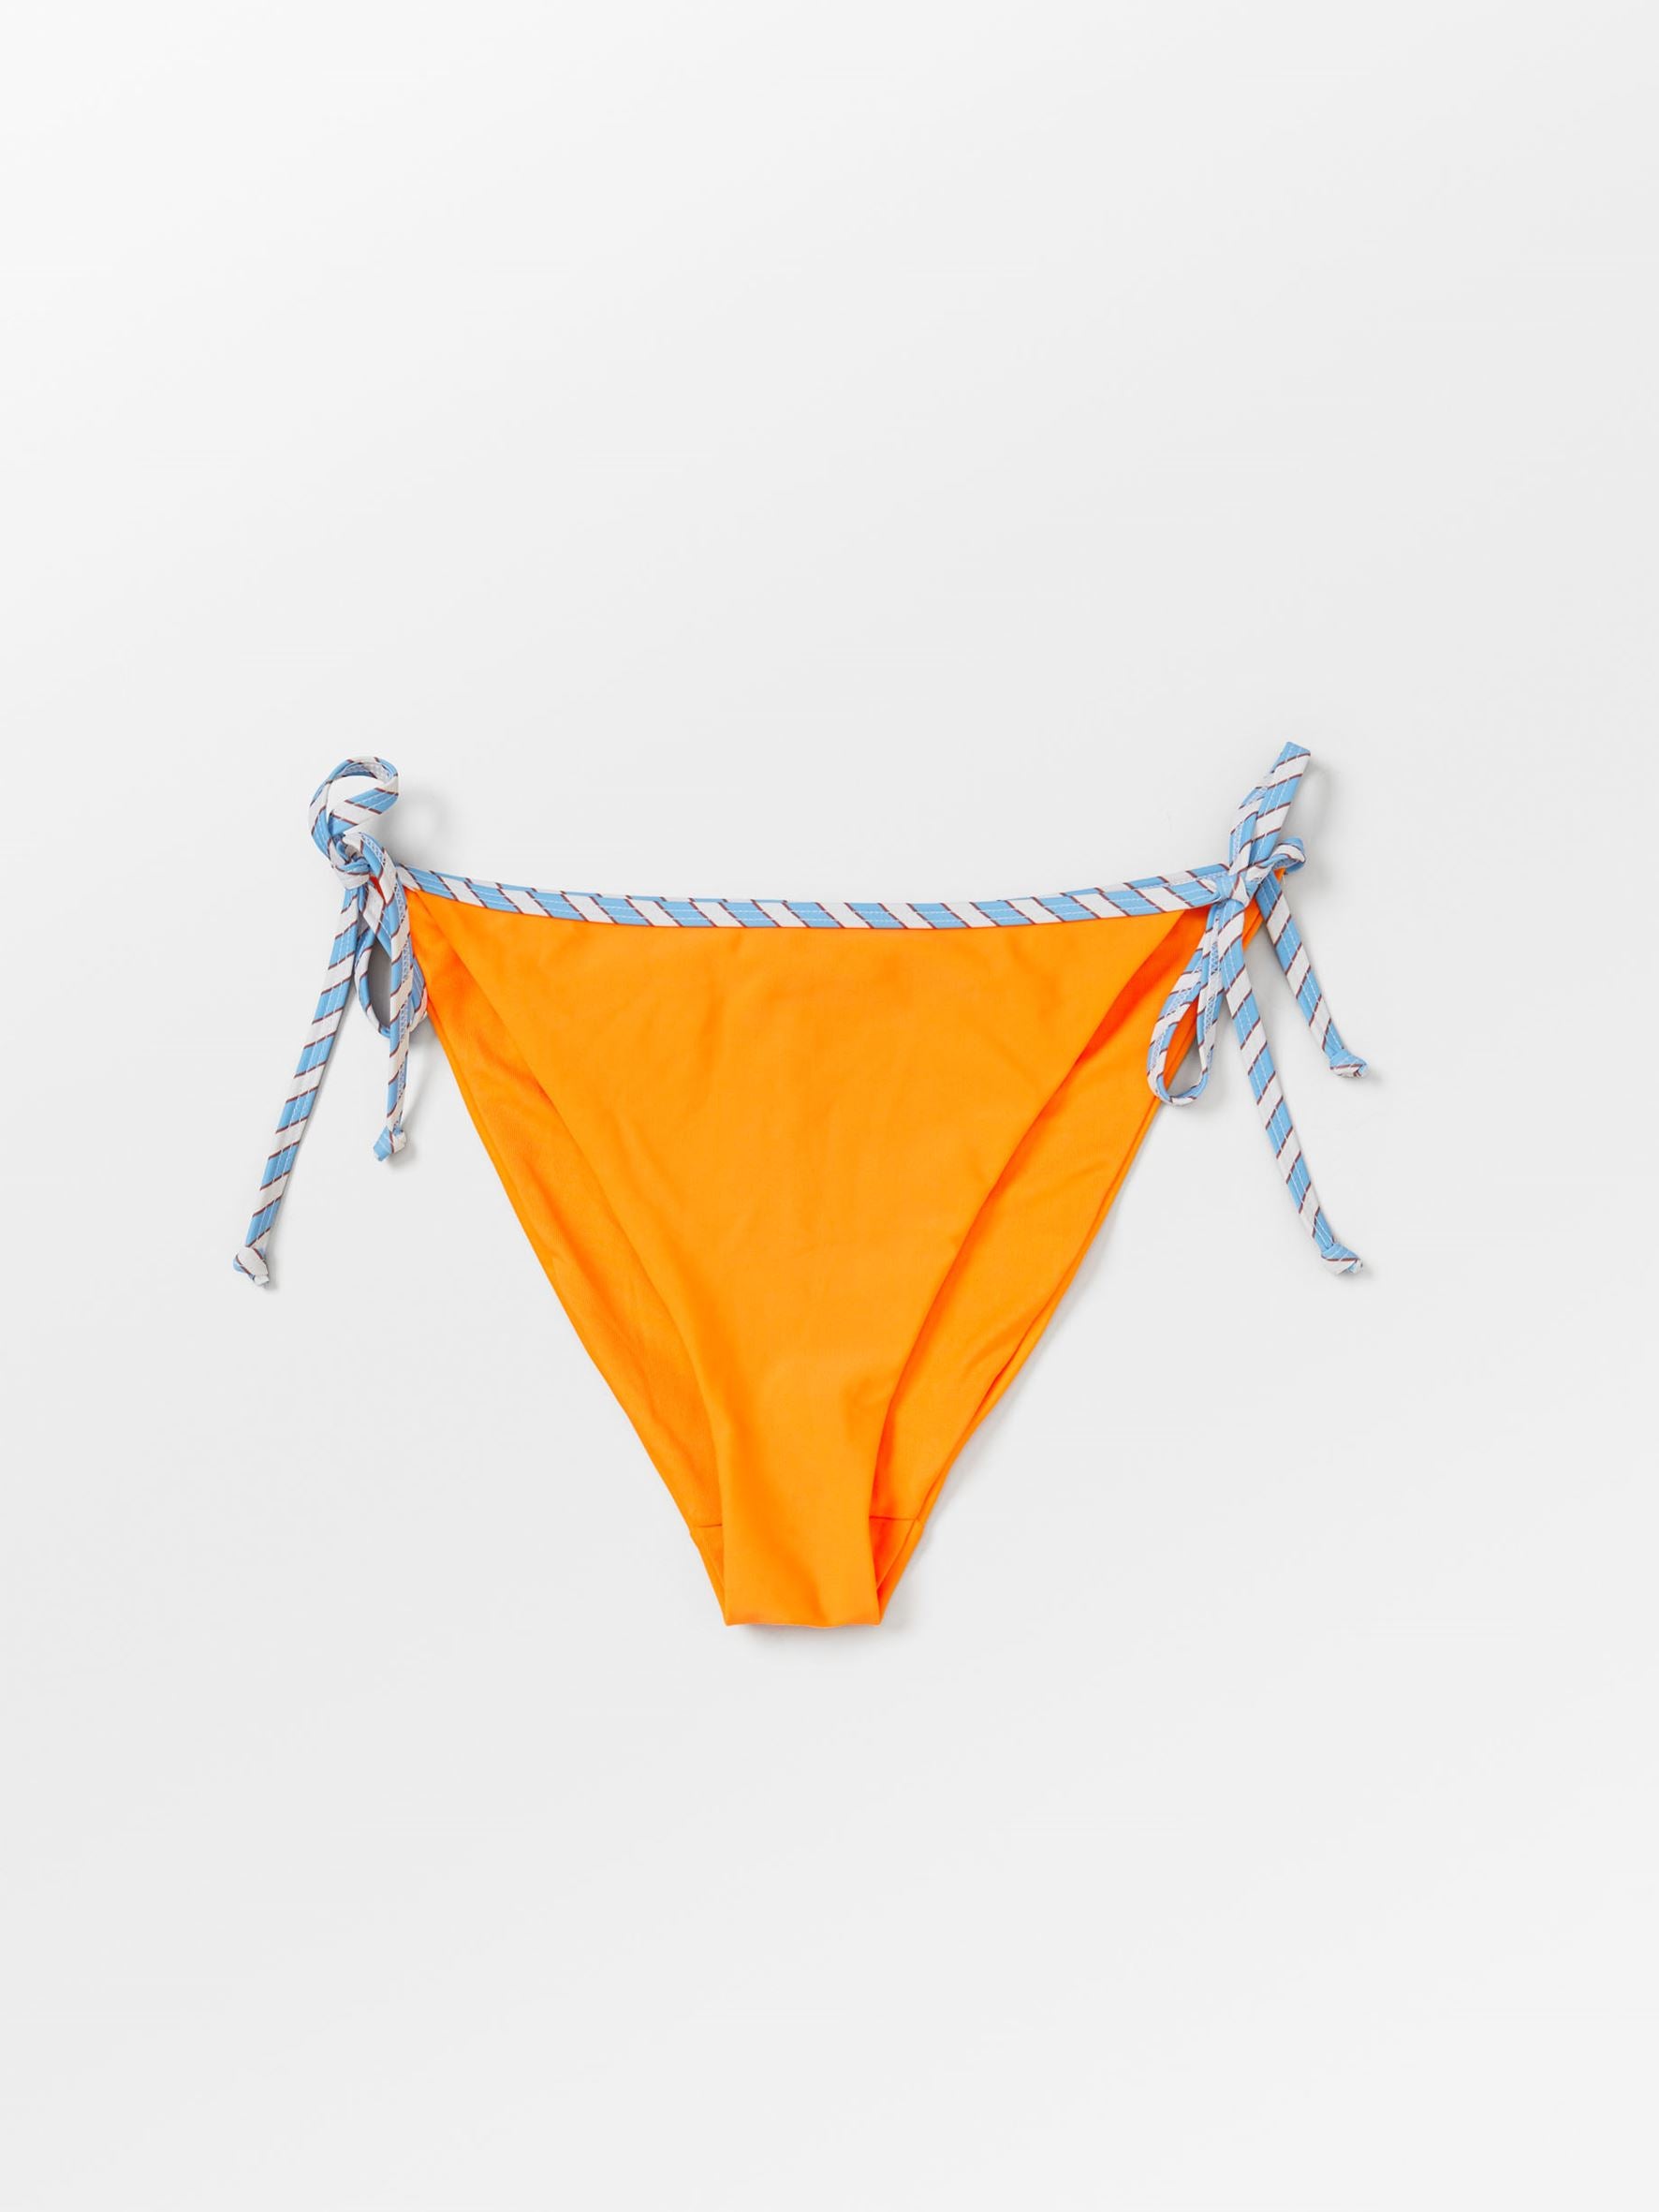 Becksöndergaard, Solid Baila Bikini Tanga - Apricot, archive, archive, sale, sale